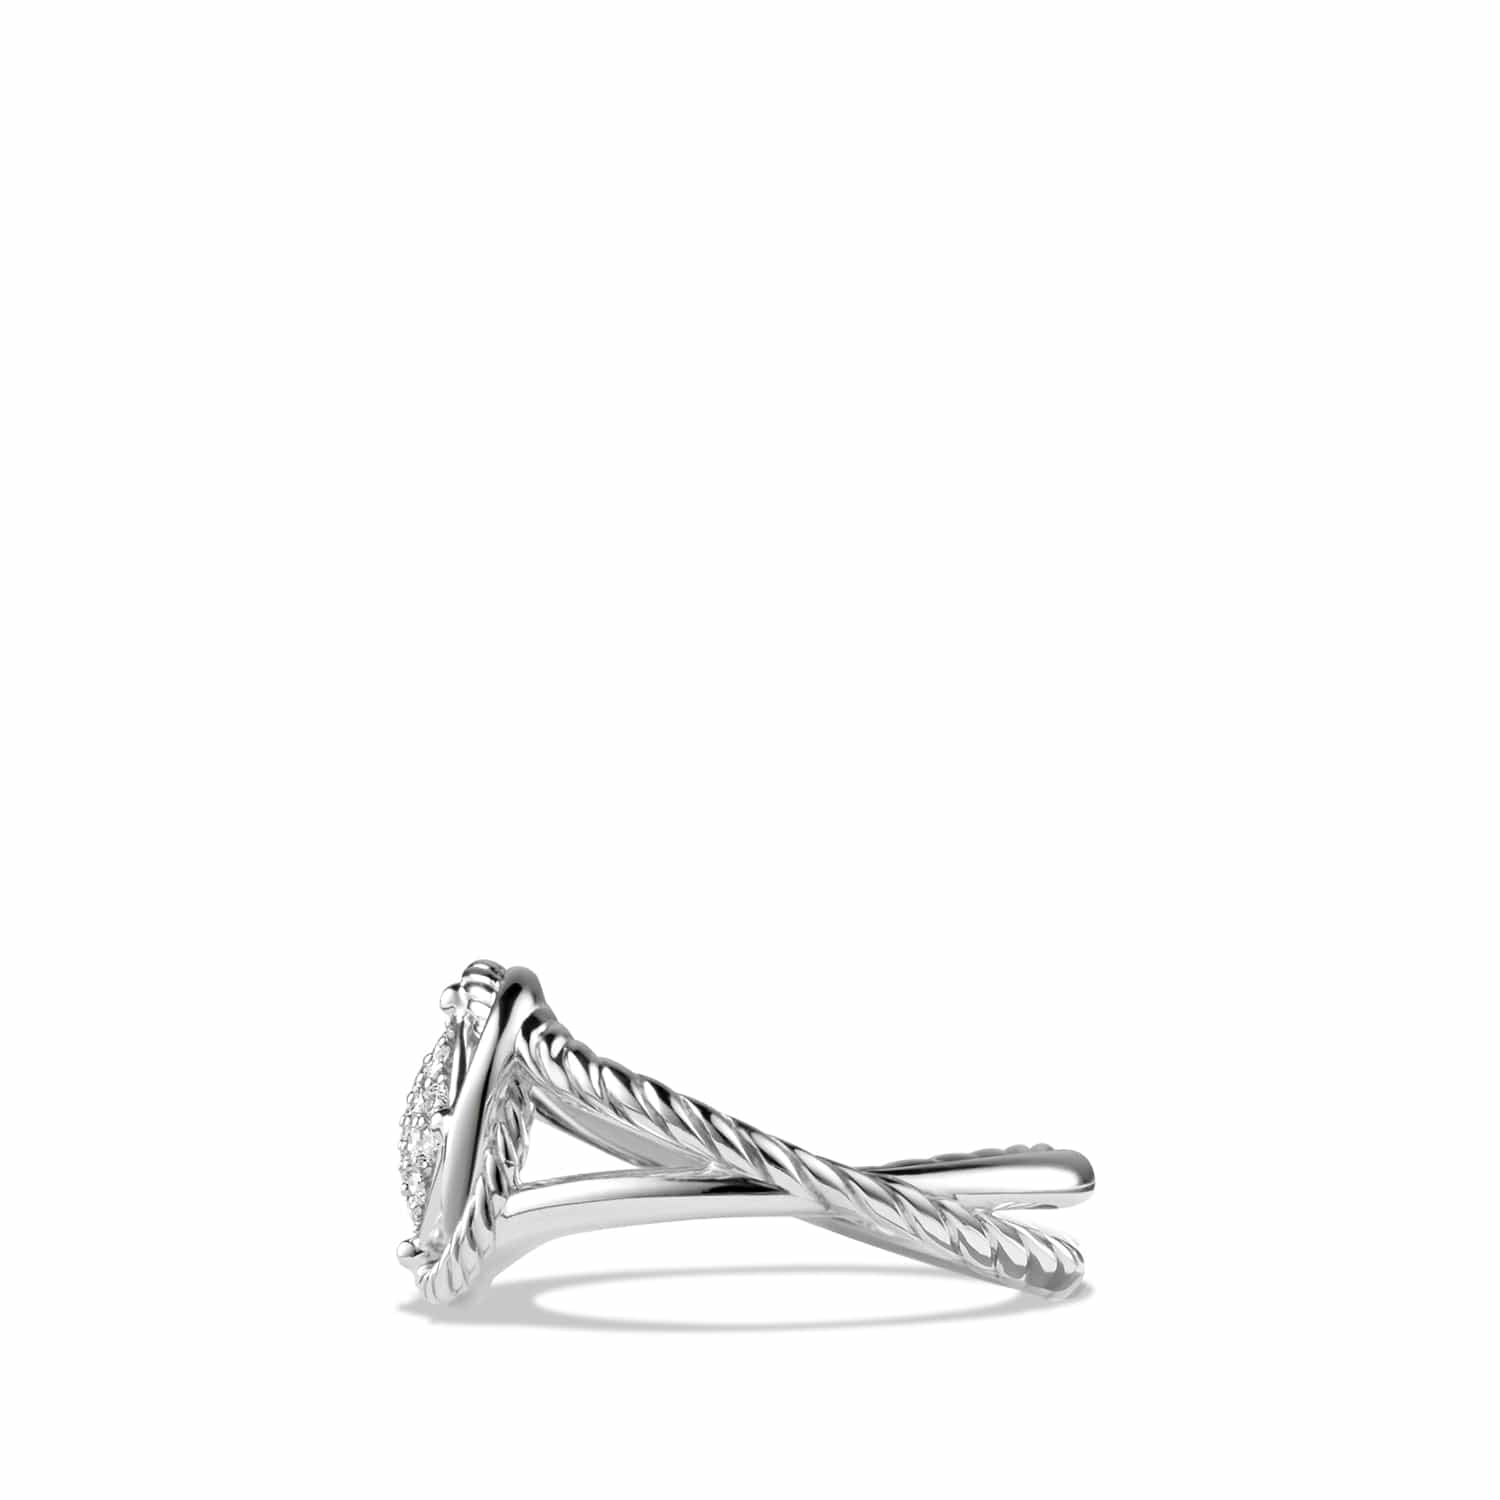 Infinity Ring with Diamonds